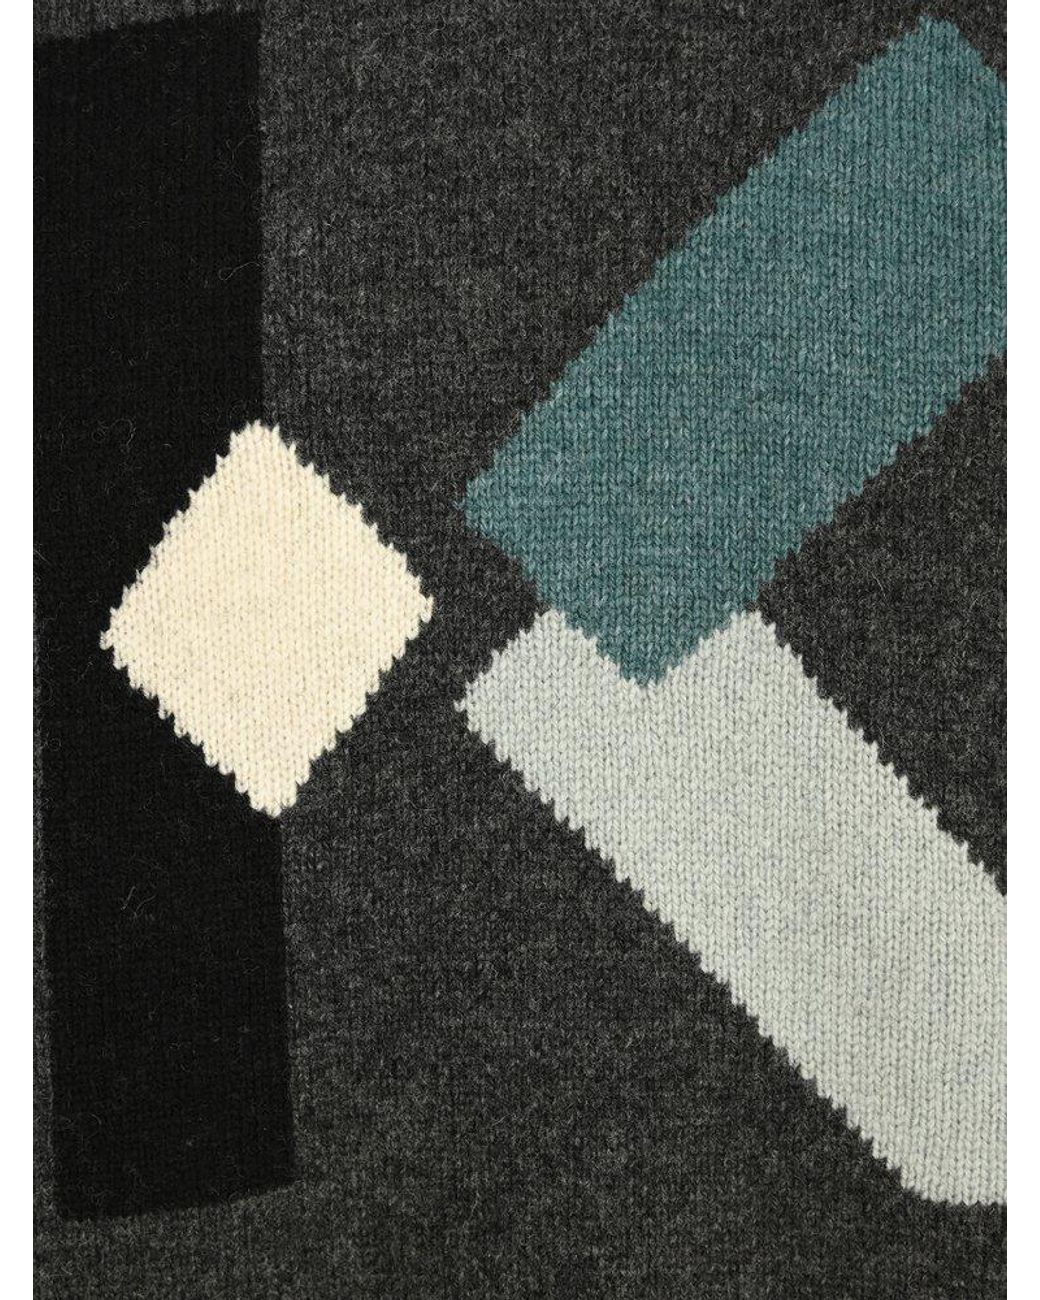 KENZO Wool K Intarsia Knit Sweater in Grey (Gray) for Men - Save 